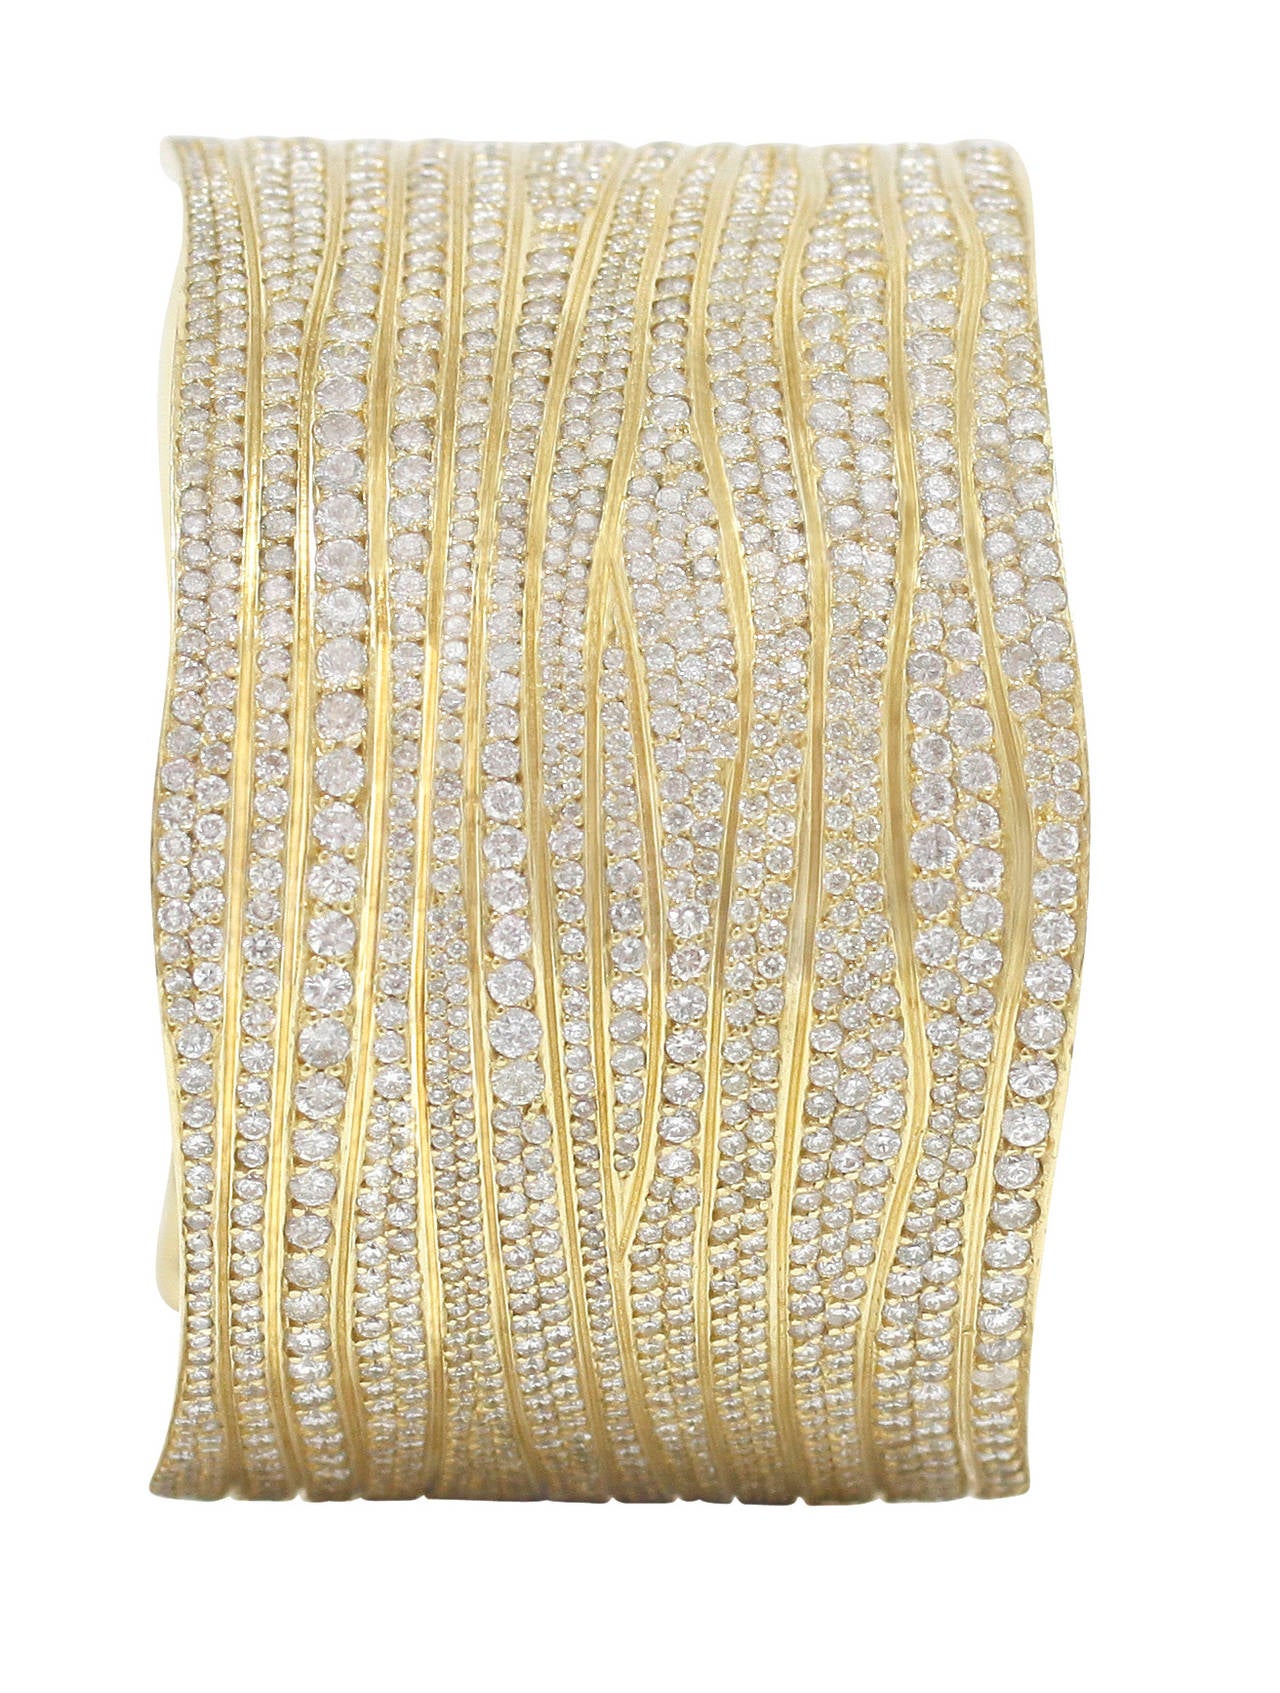 Dazzling Diamond Yellow Gold Cuff Bracelet In New Condition For Sale In Buffalo Grove, IL